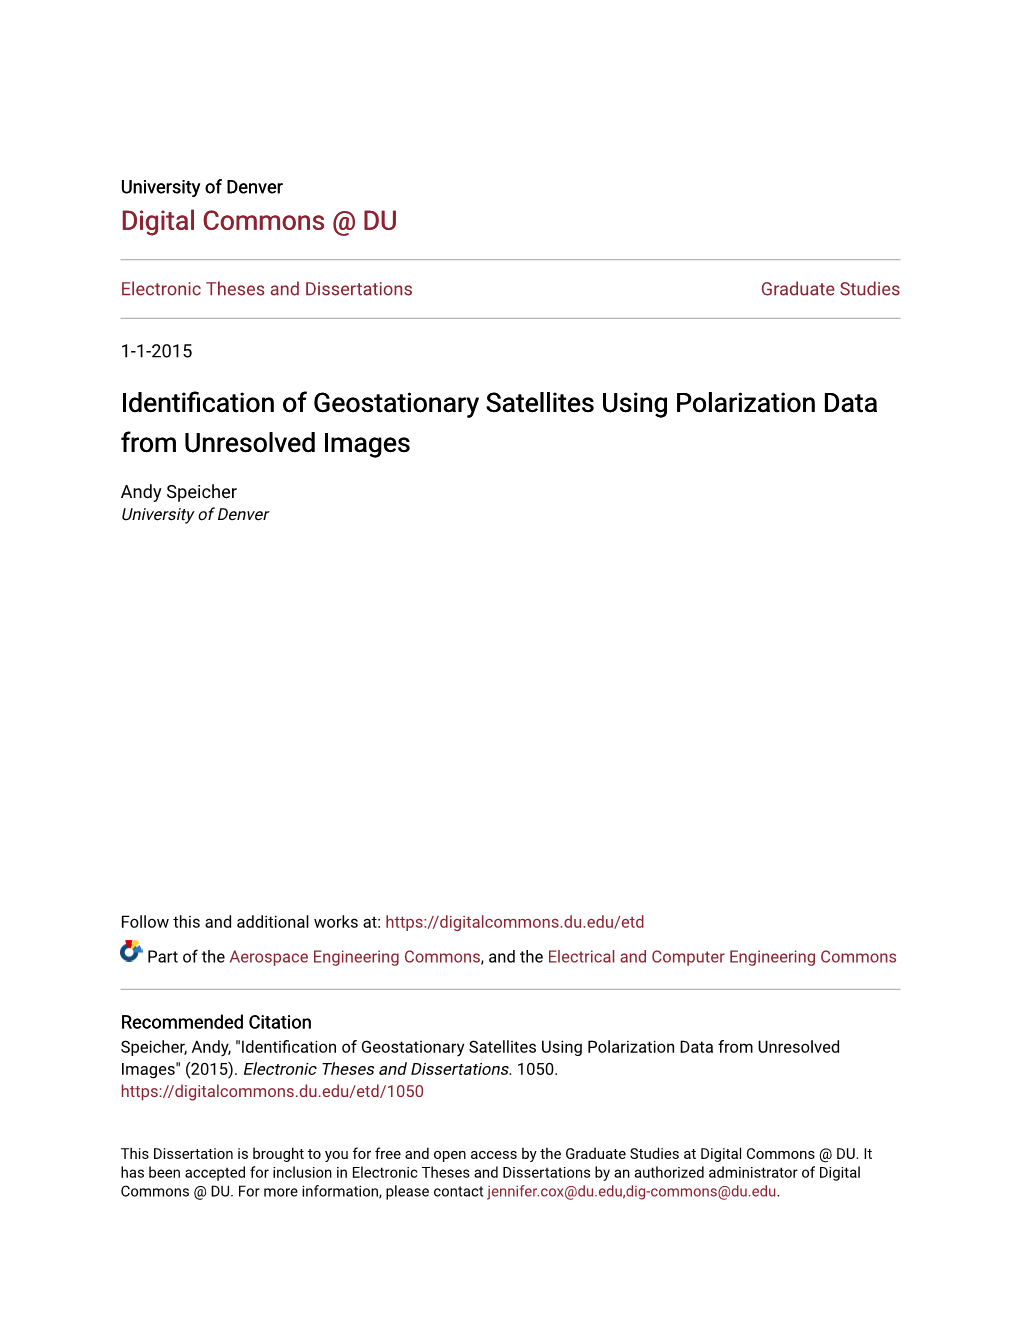 Identification of Geostationary Satellites Using Polarization Data from Unresolved Images